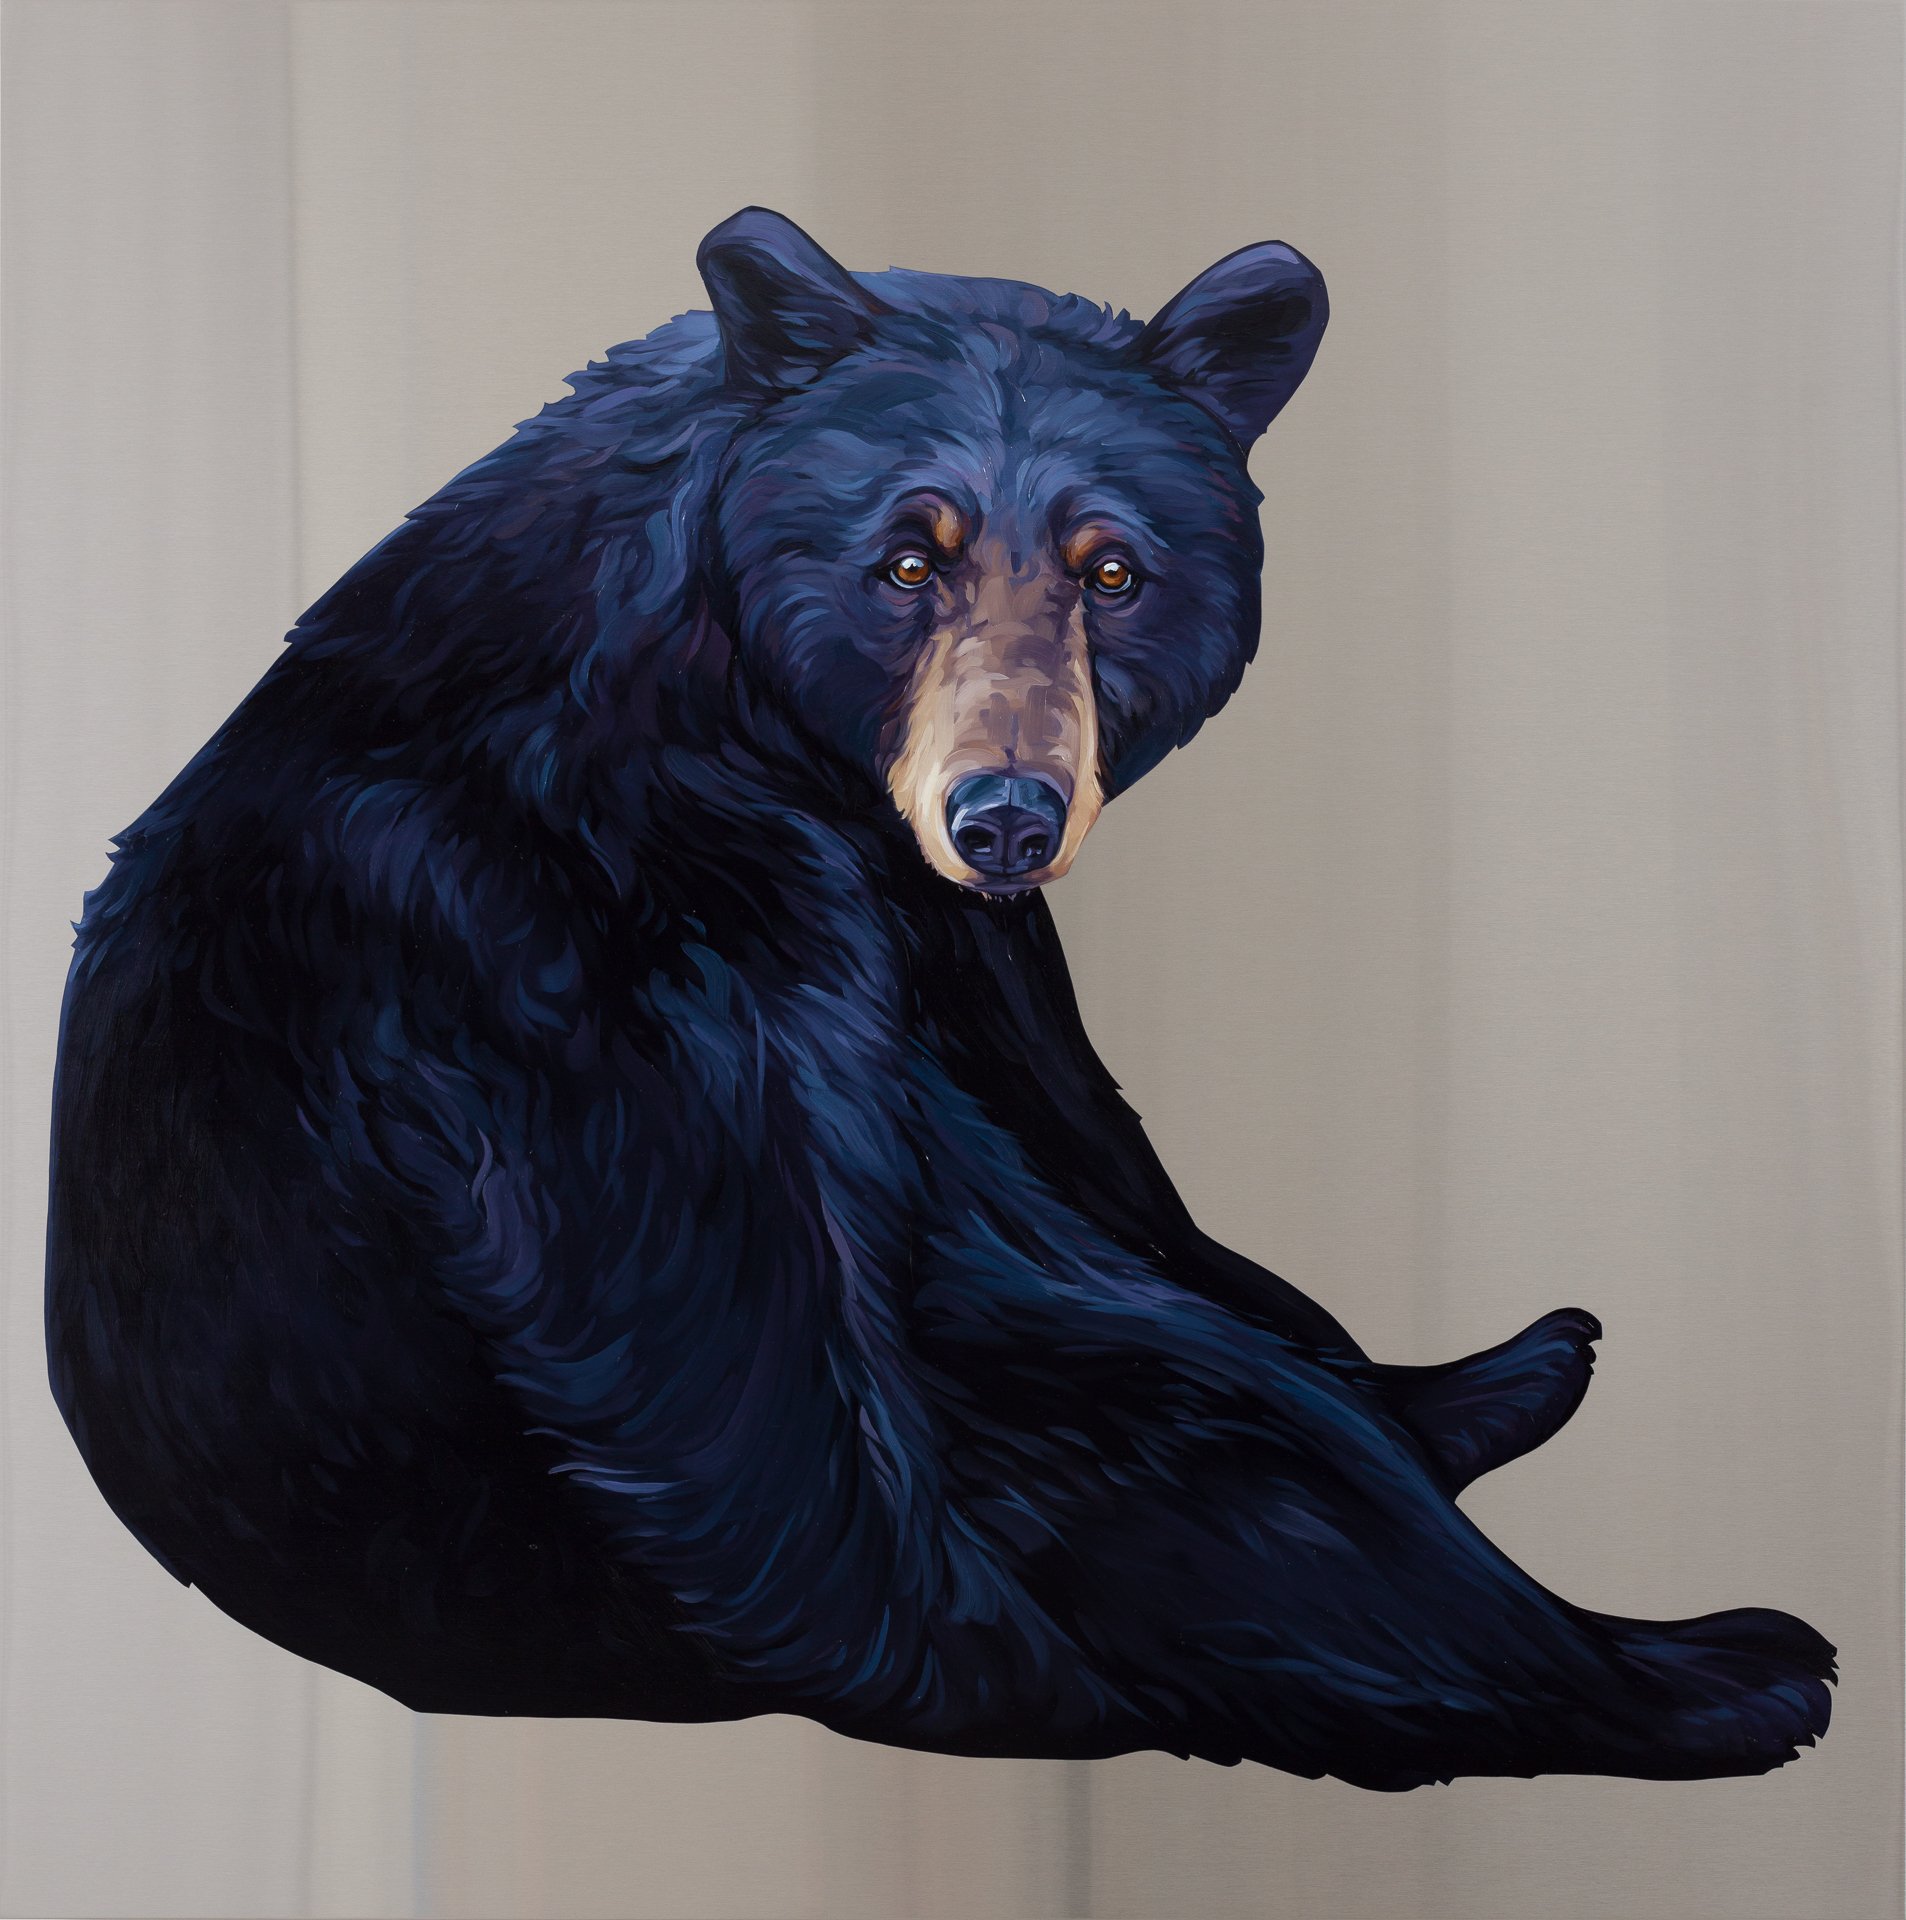  Black Bear. Oil on stainless steel, 40in x 40in 